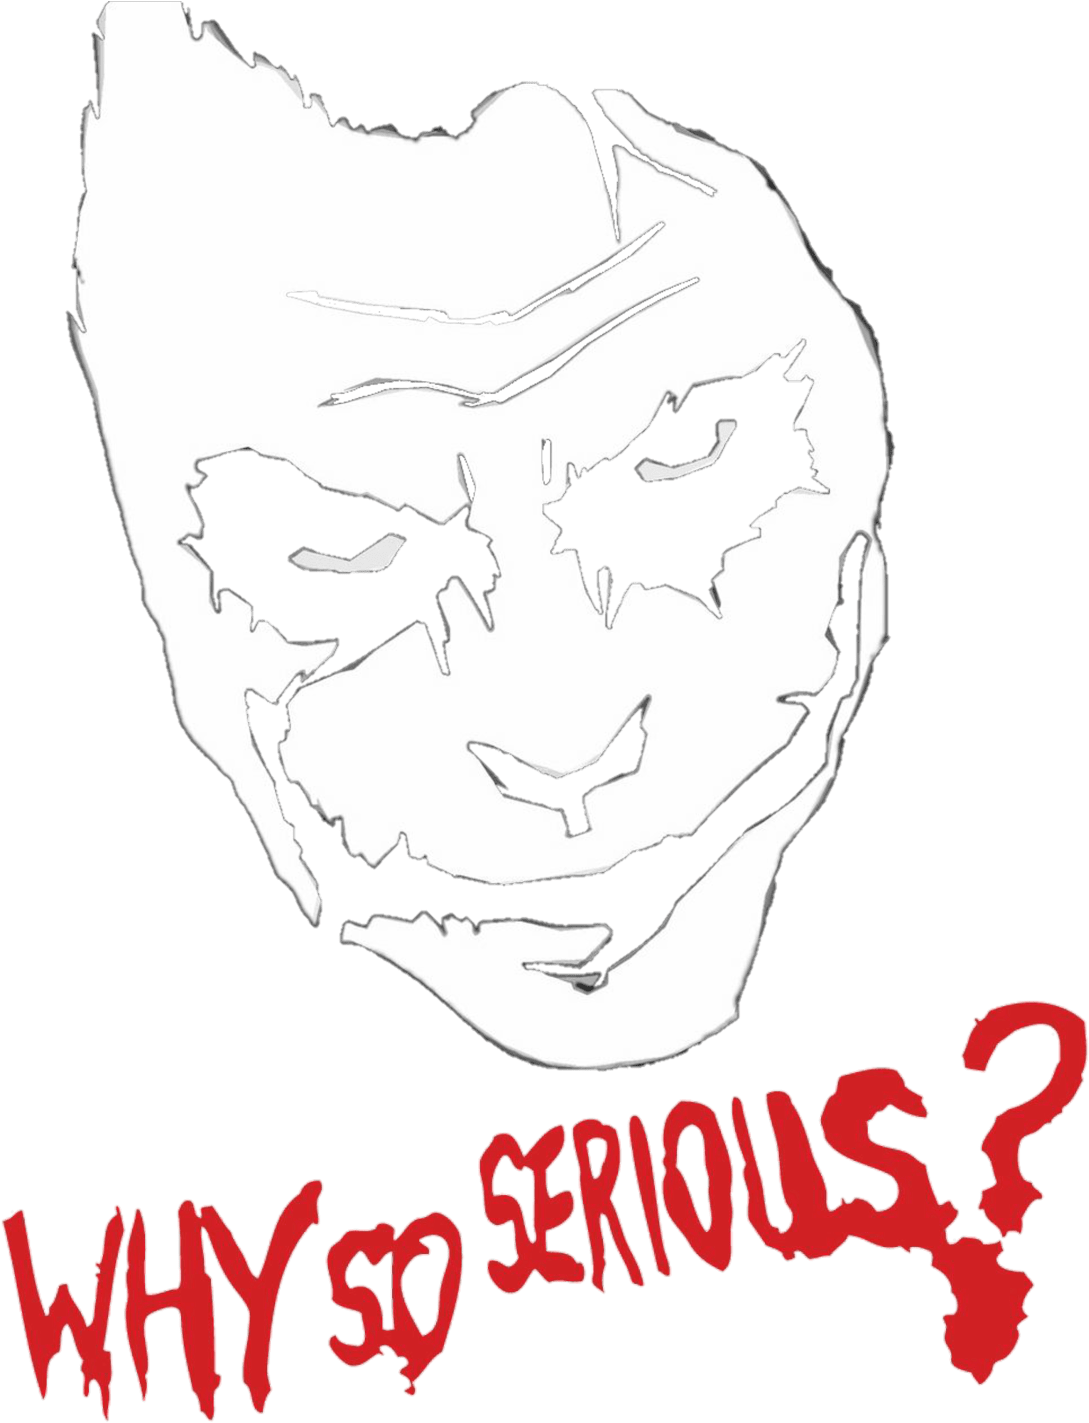 File:The Joker logo.svg - Wikipedia